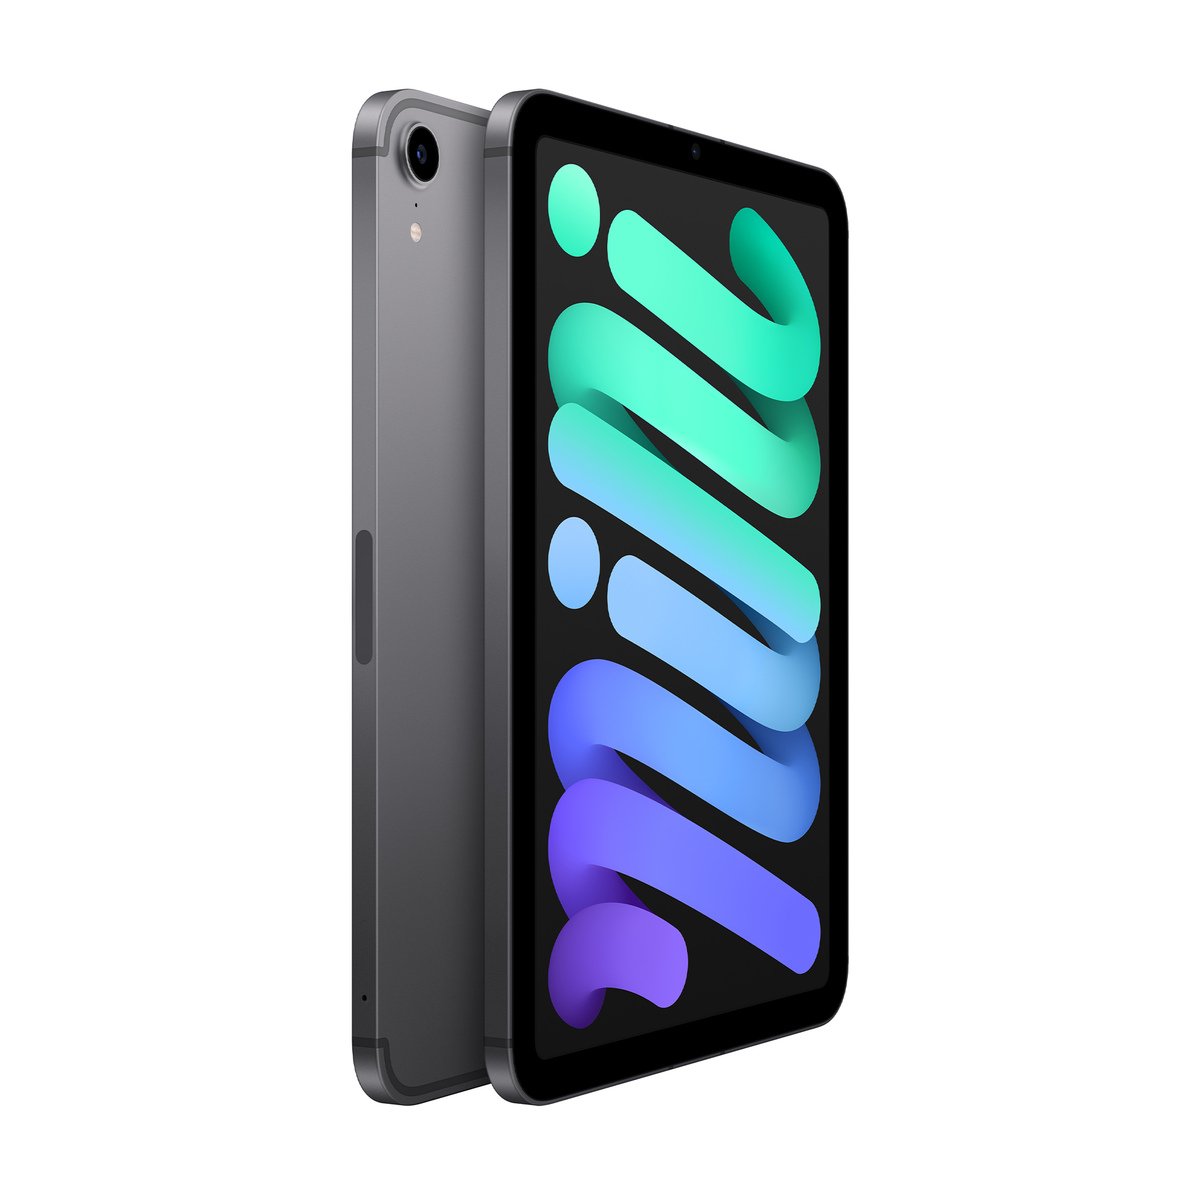 Apple iPad mini 2021 (6th Generation) 8.3-inch, Wi-Fi + Cellular 5G, 64GB - Space Gray